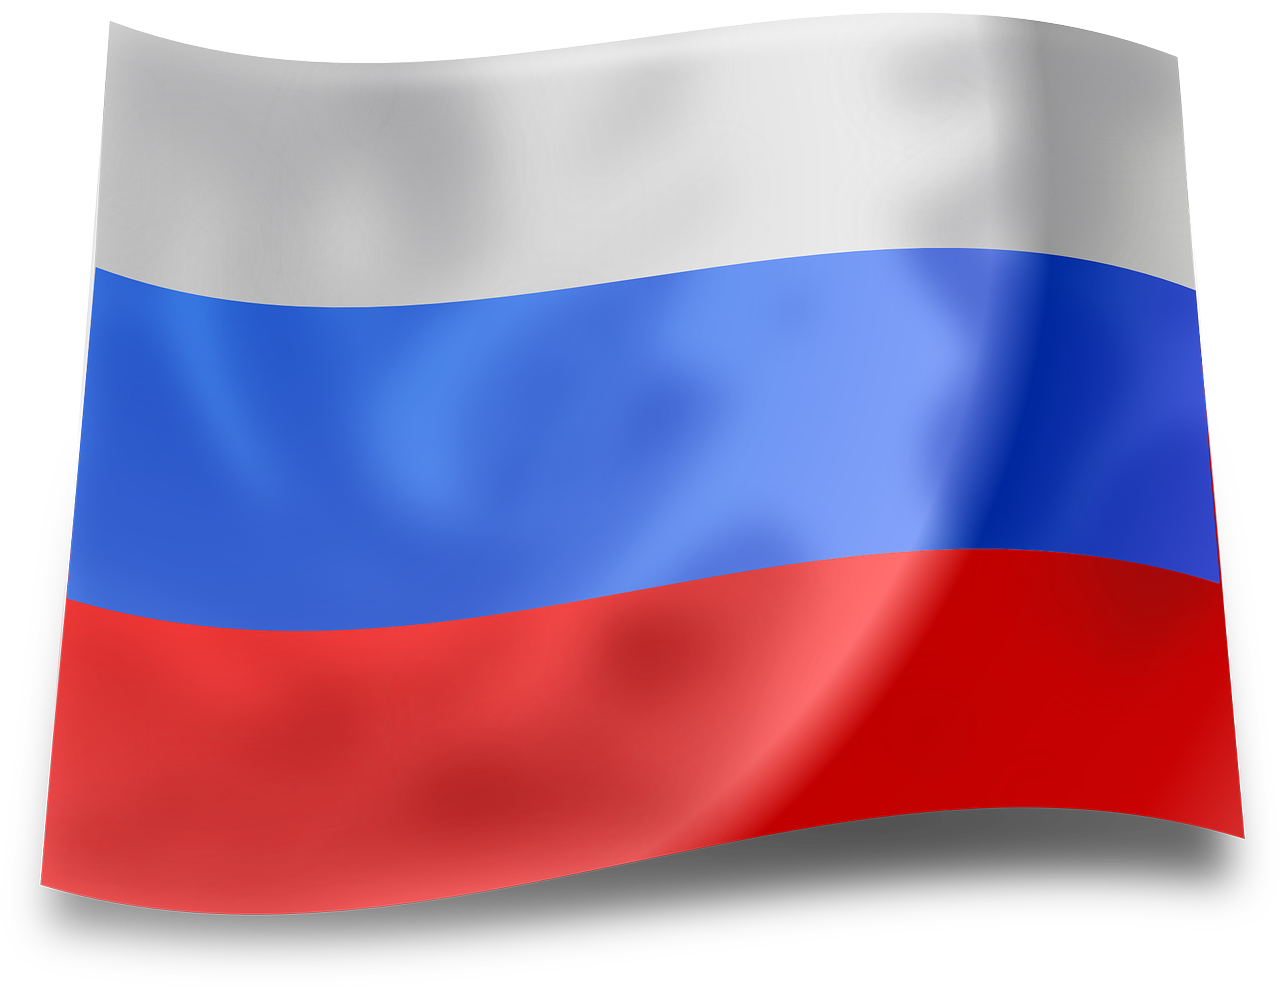 A waving Russian flag